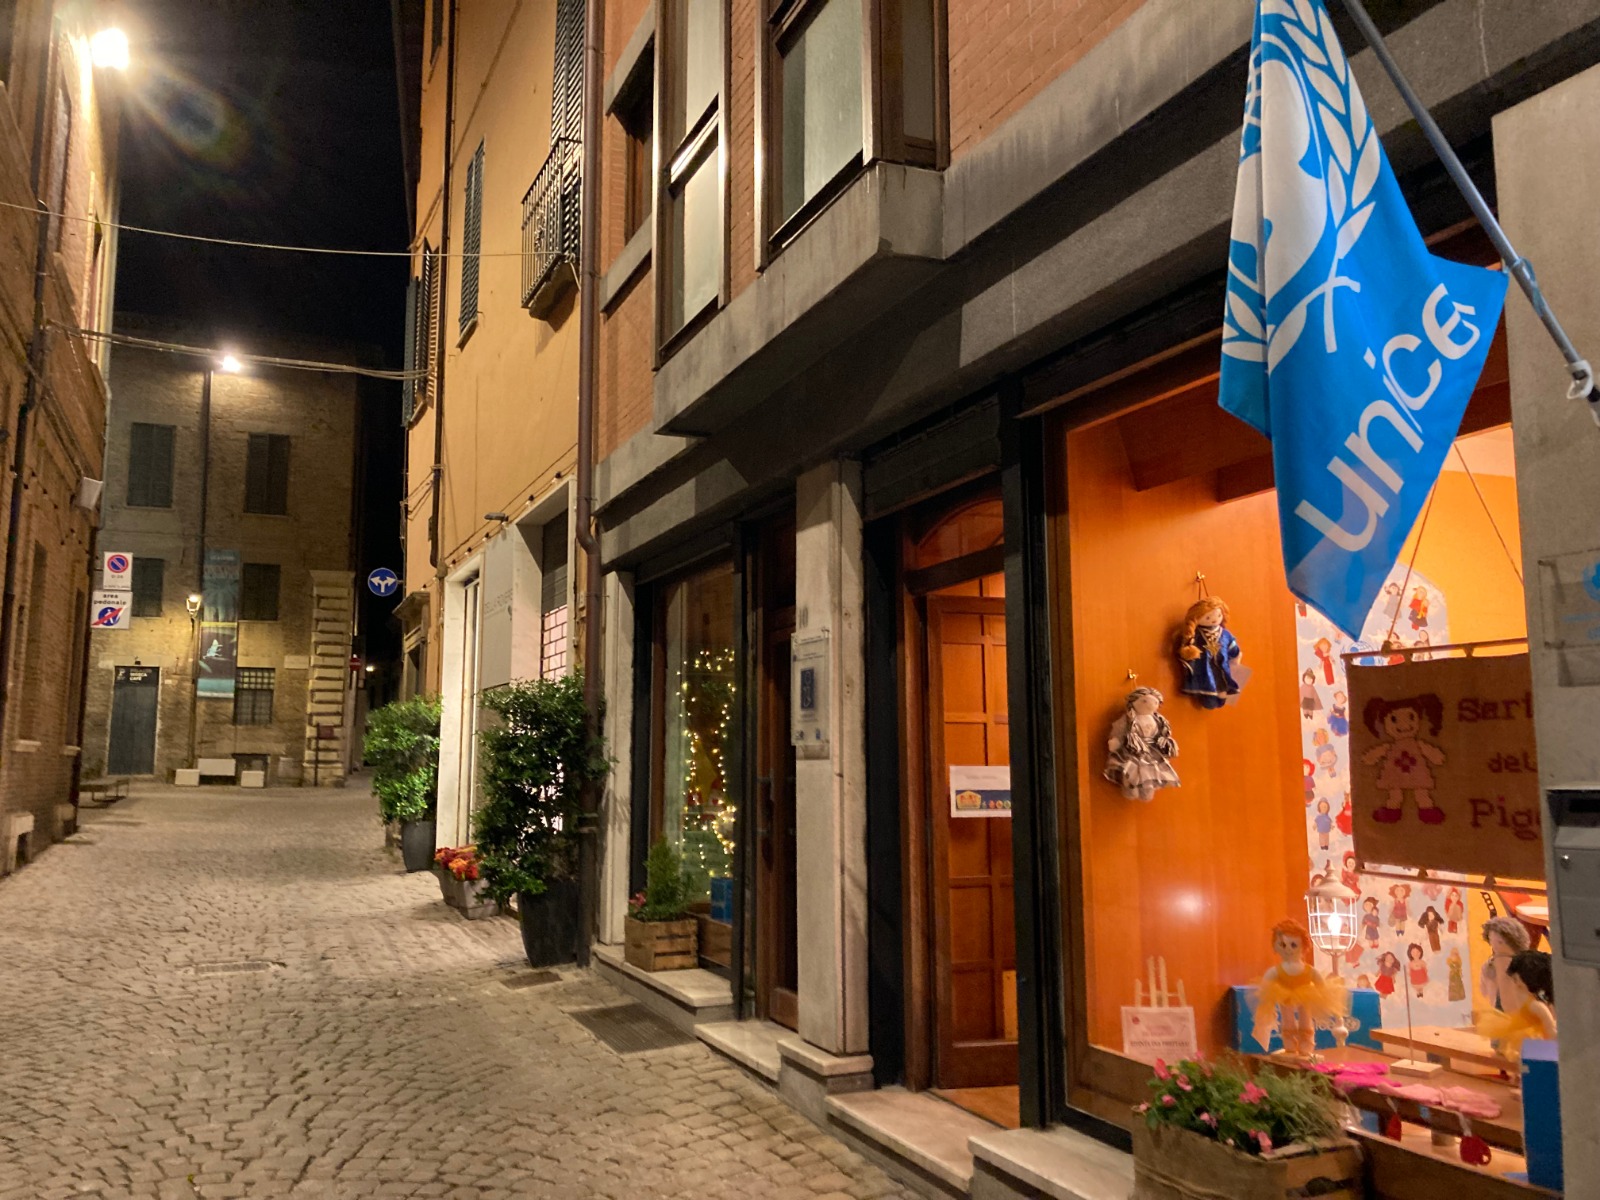 Nuova sede Unicef a Pesaro, sarà anche un “baby pit stop”